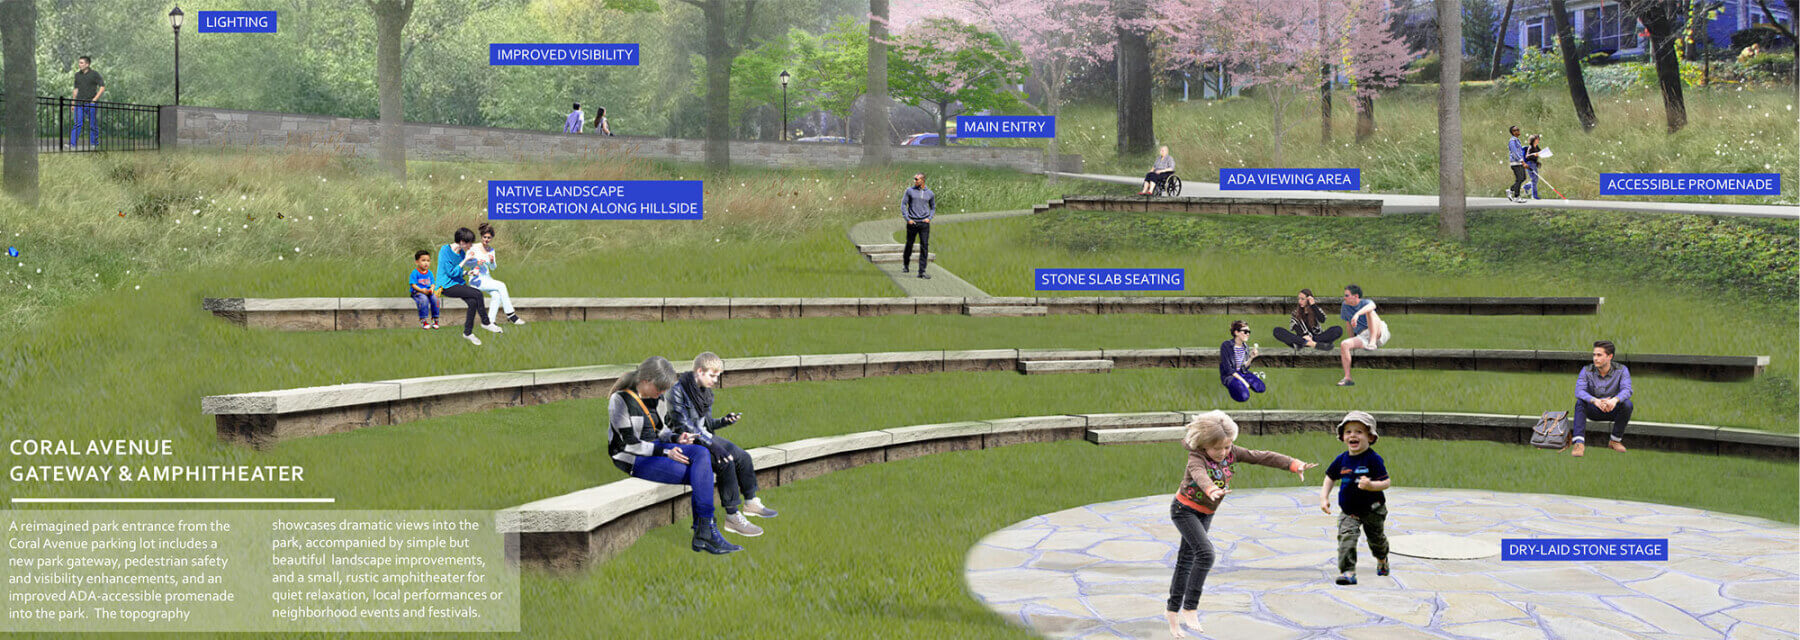 Bingham Park Master Plan amphitheater rendering